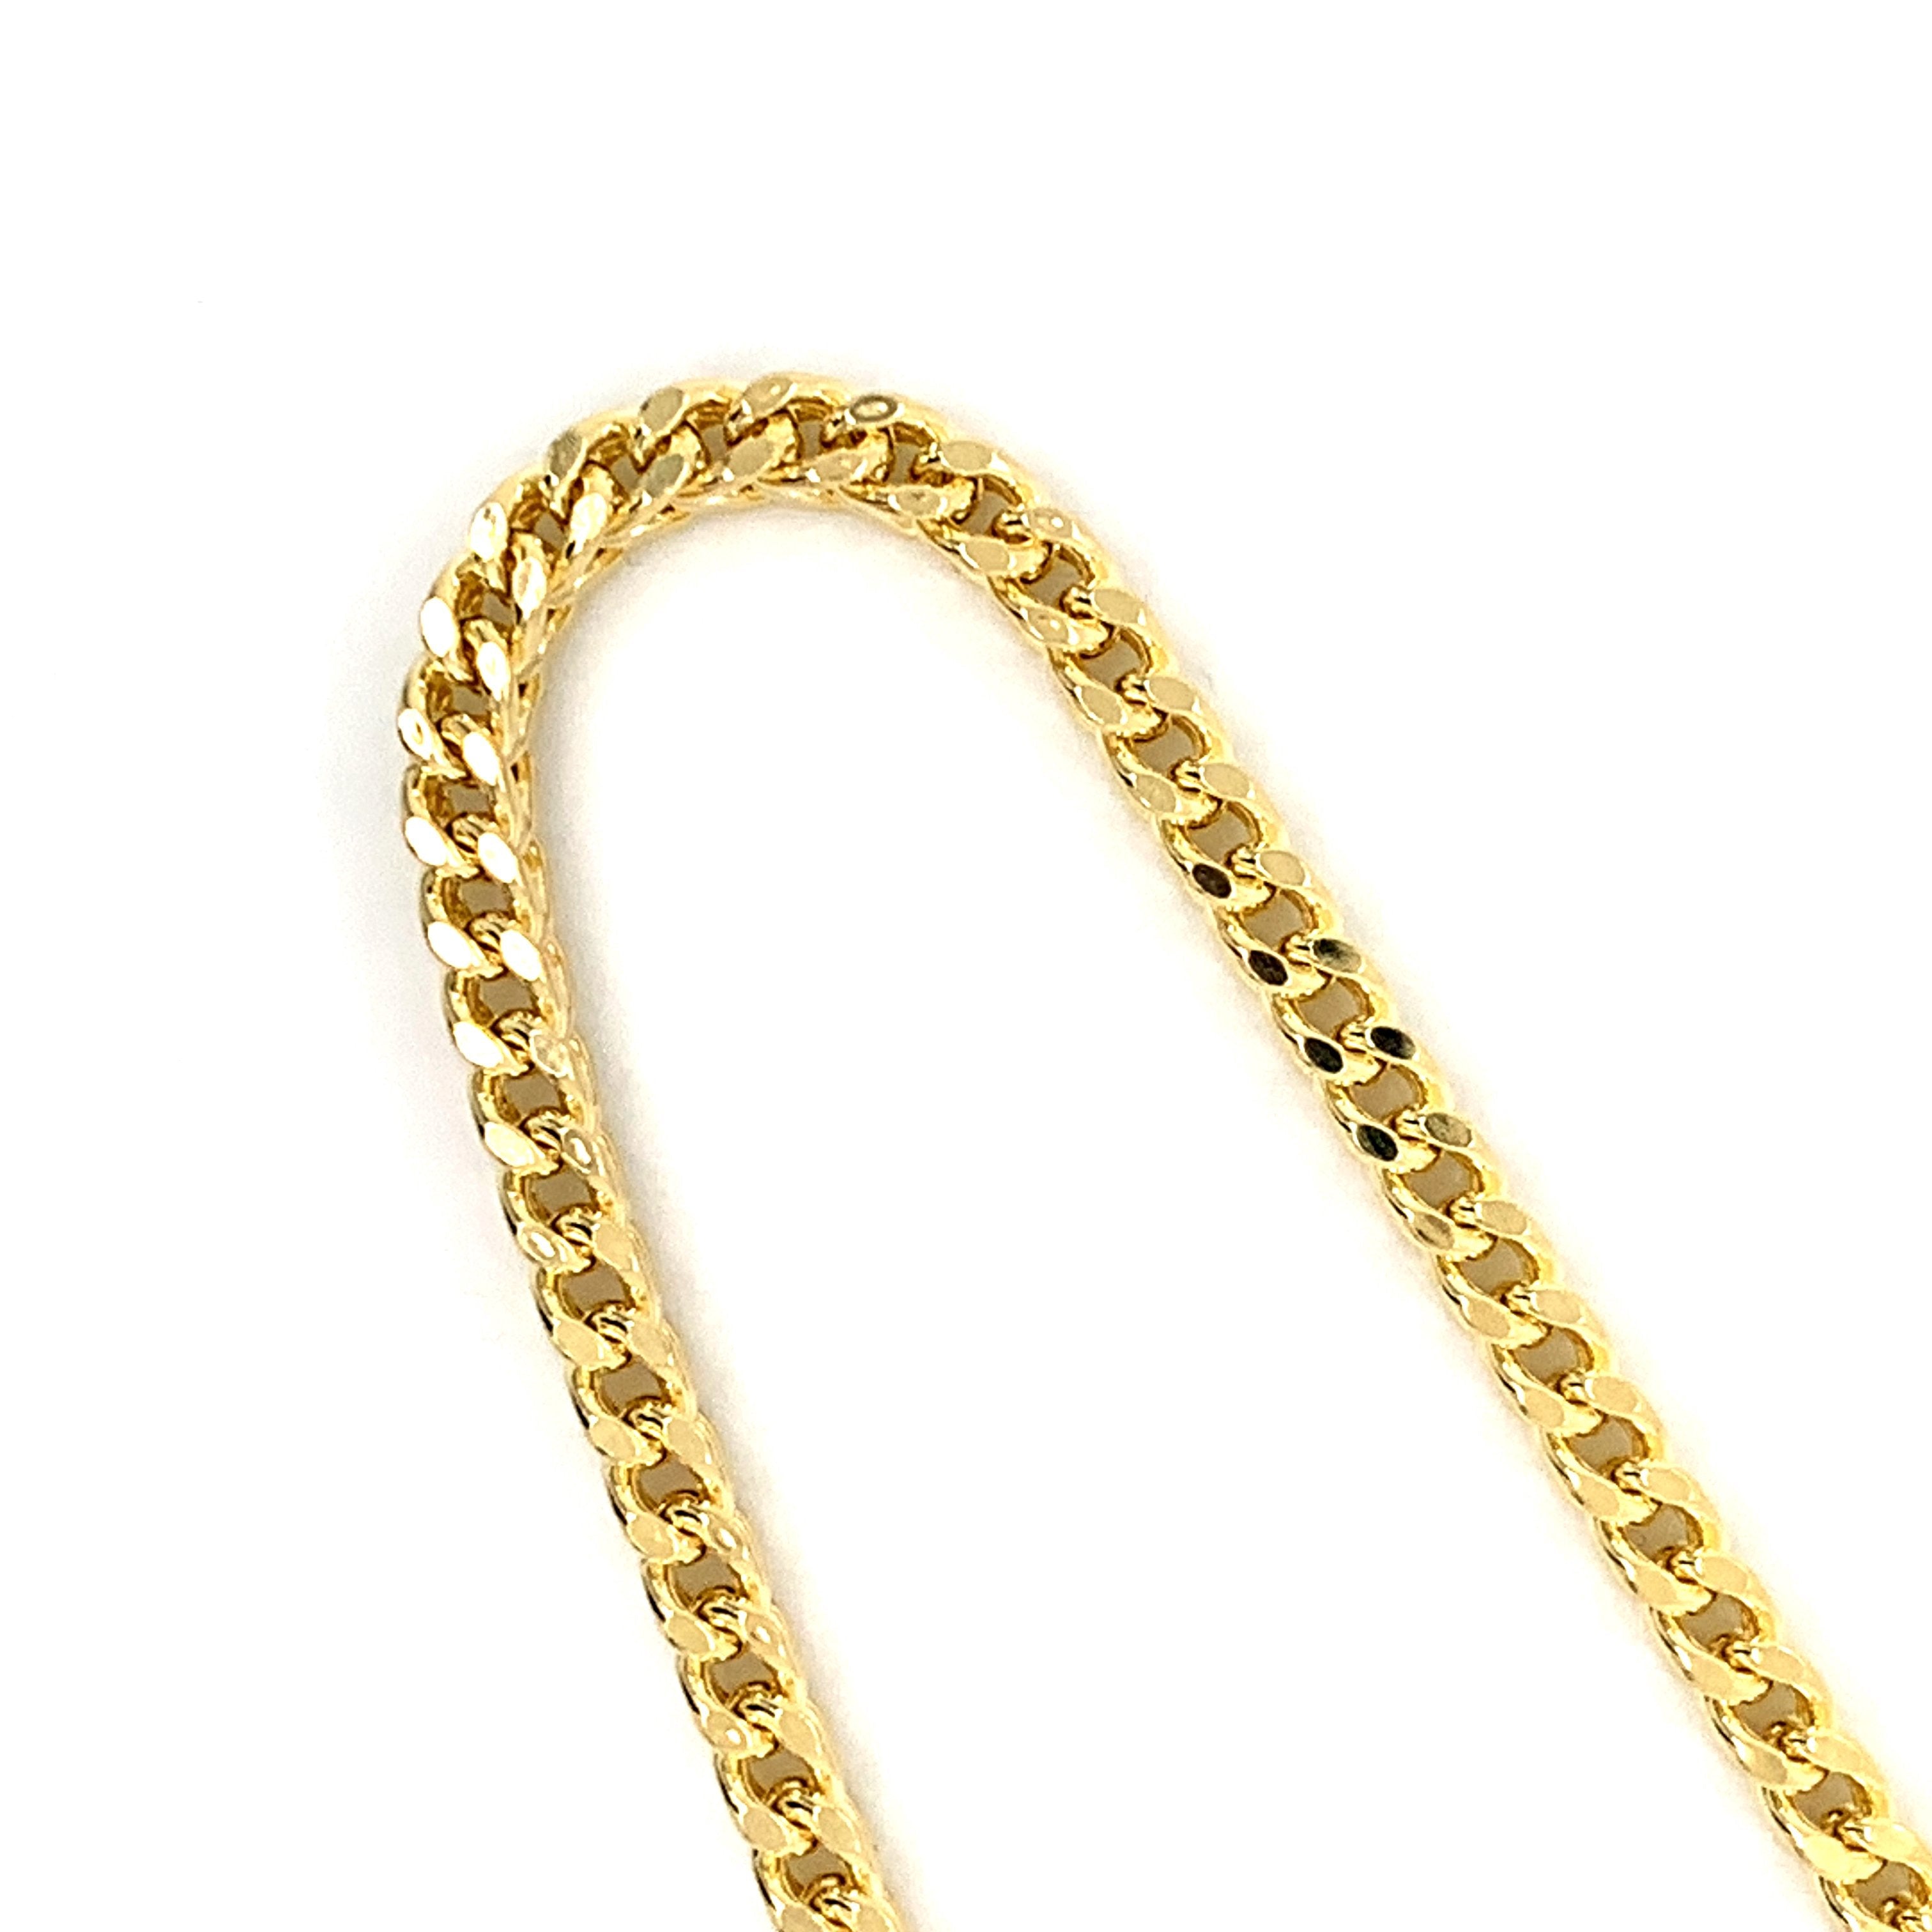 10K Gold Franco Chain (Regular) - 4mm - White Carat Diamonds 